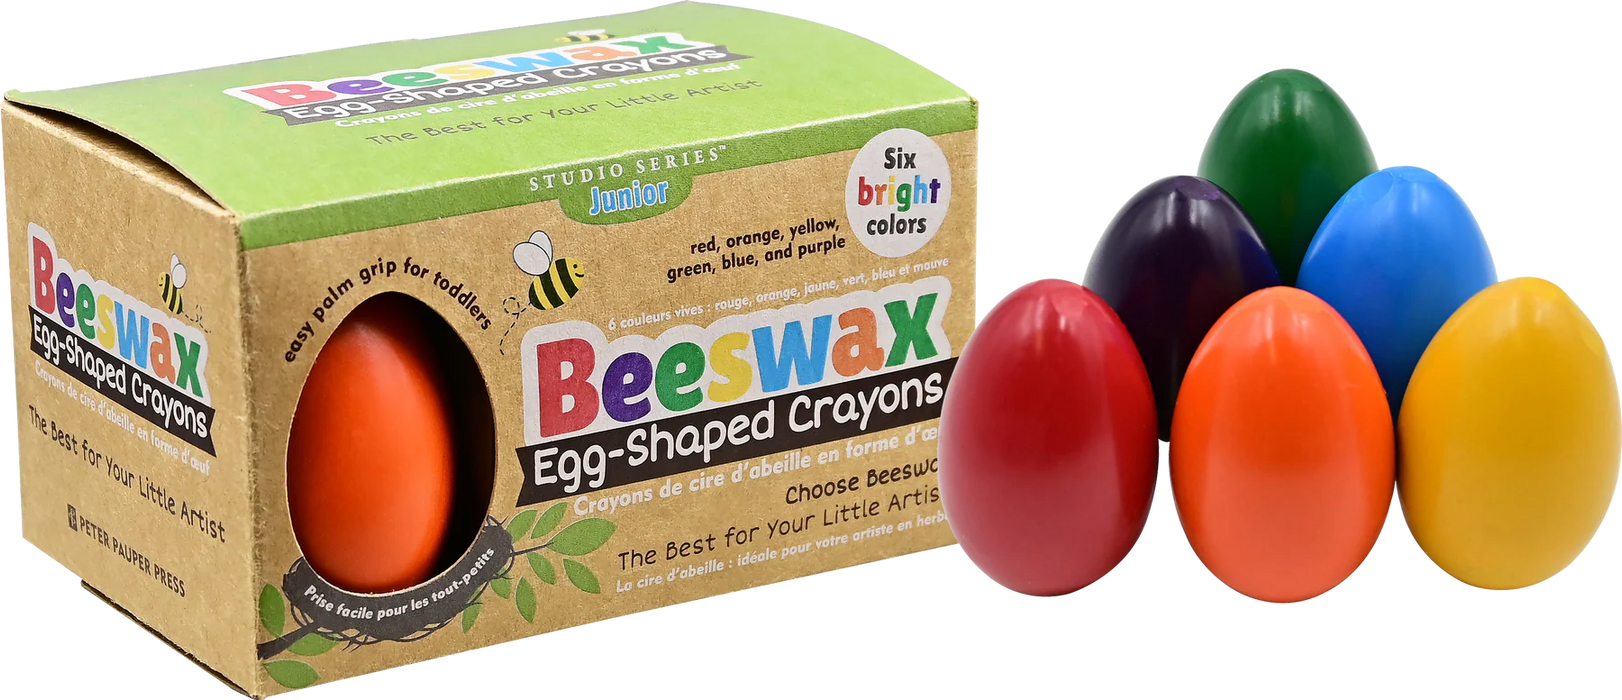 Studio Series Junior Beeswax Egg-Shaped Crayons